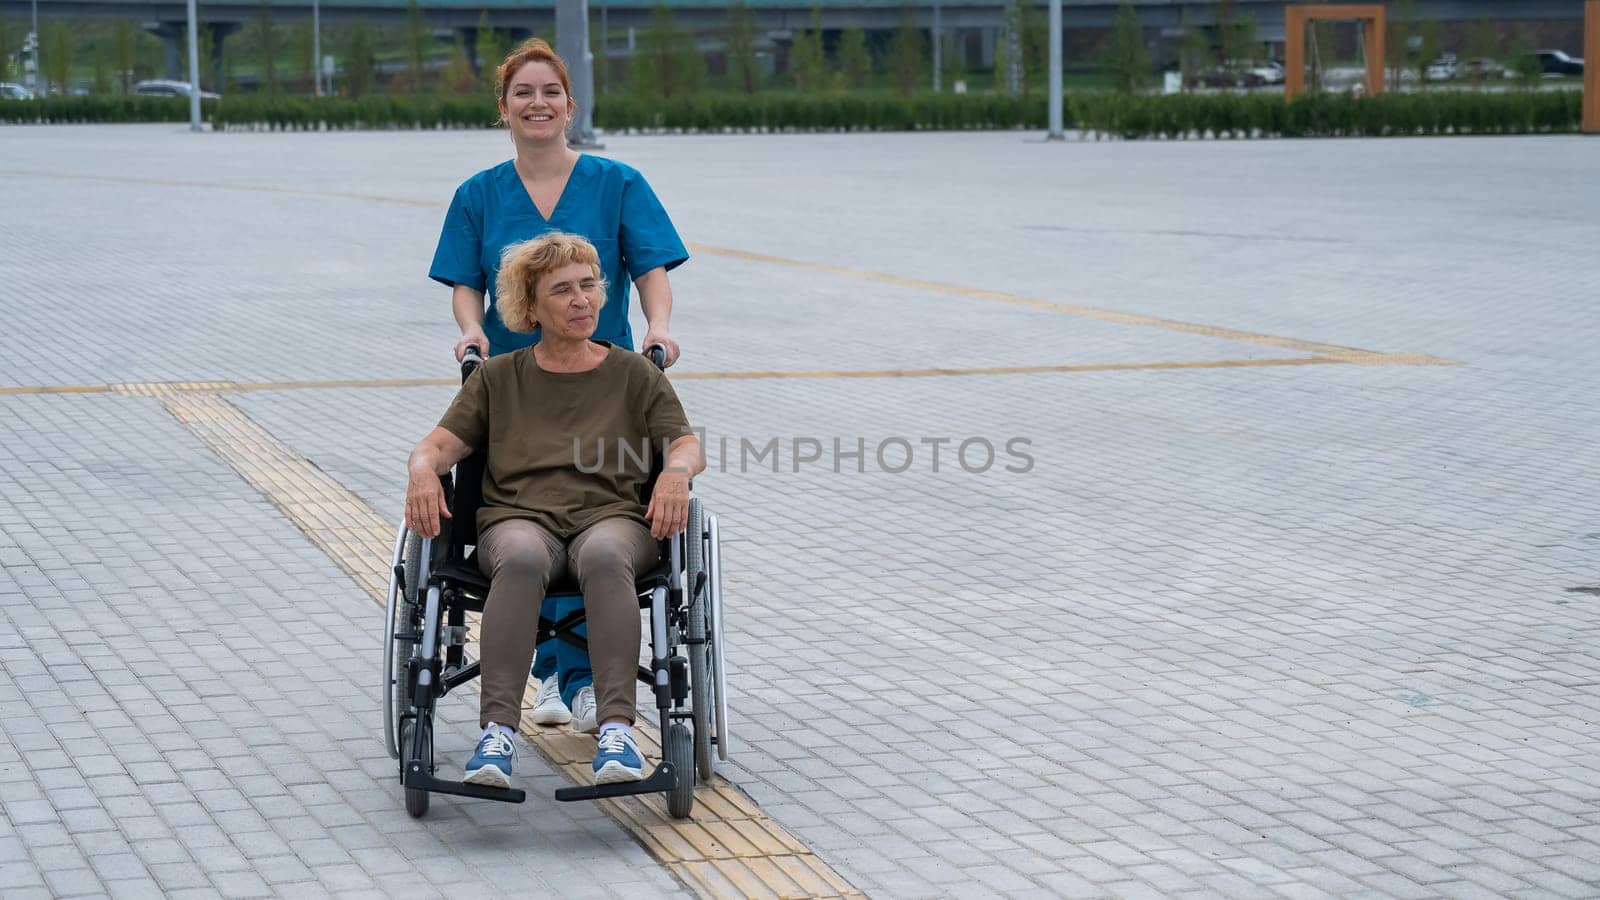 Caucasian nurse pushing elderly woman in wheelchair outdoors